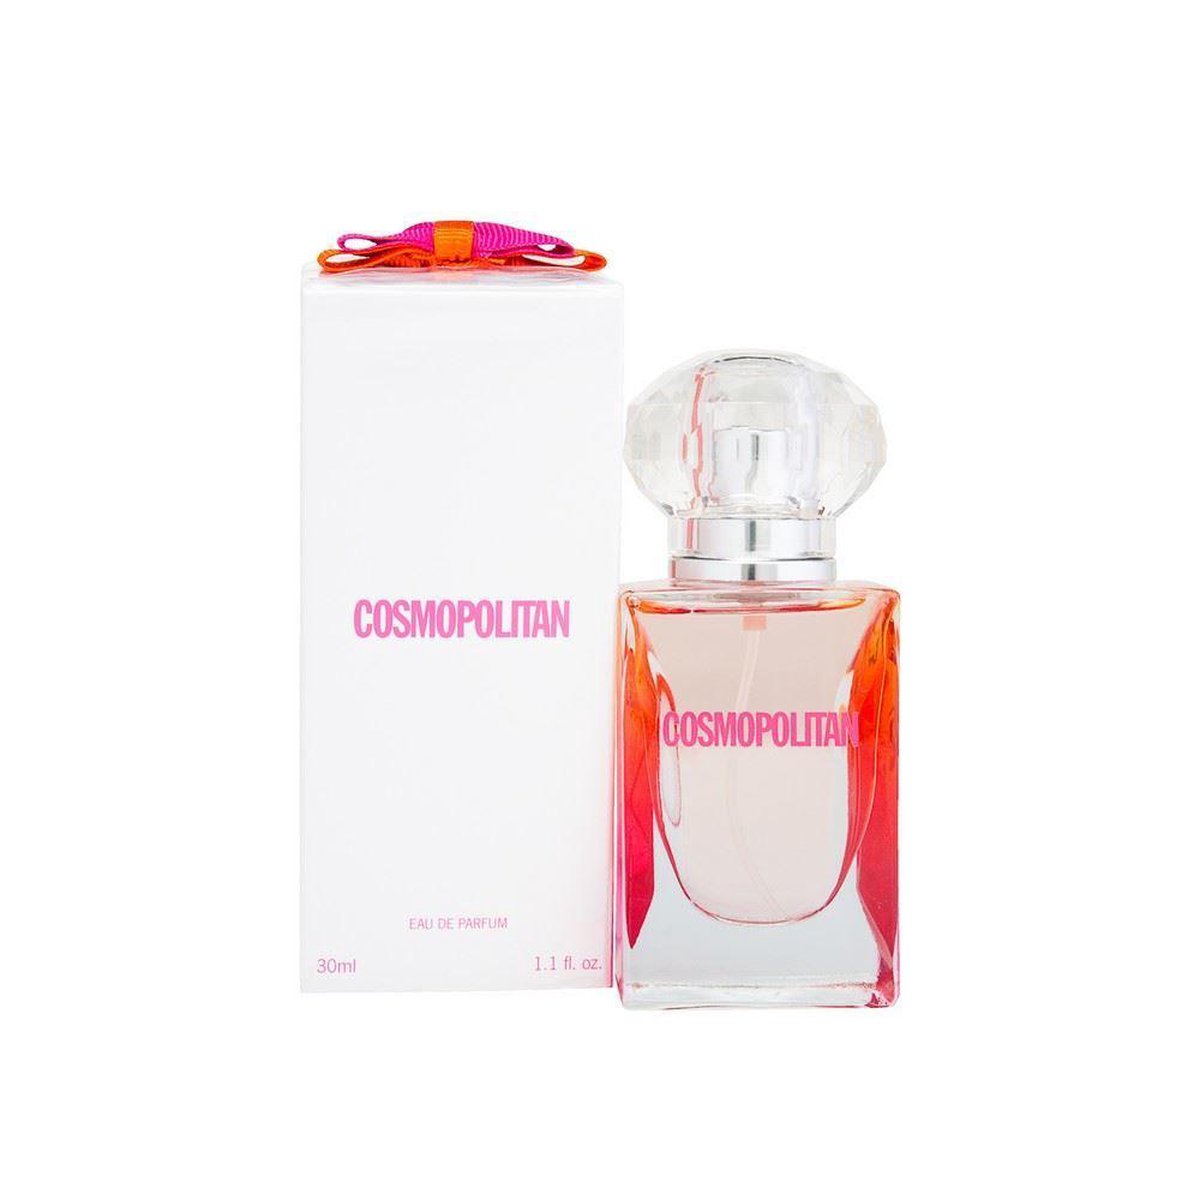 Cosmopolitan - 30ml - Eau de parfum